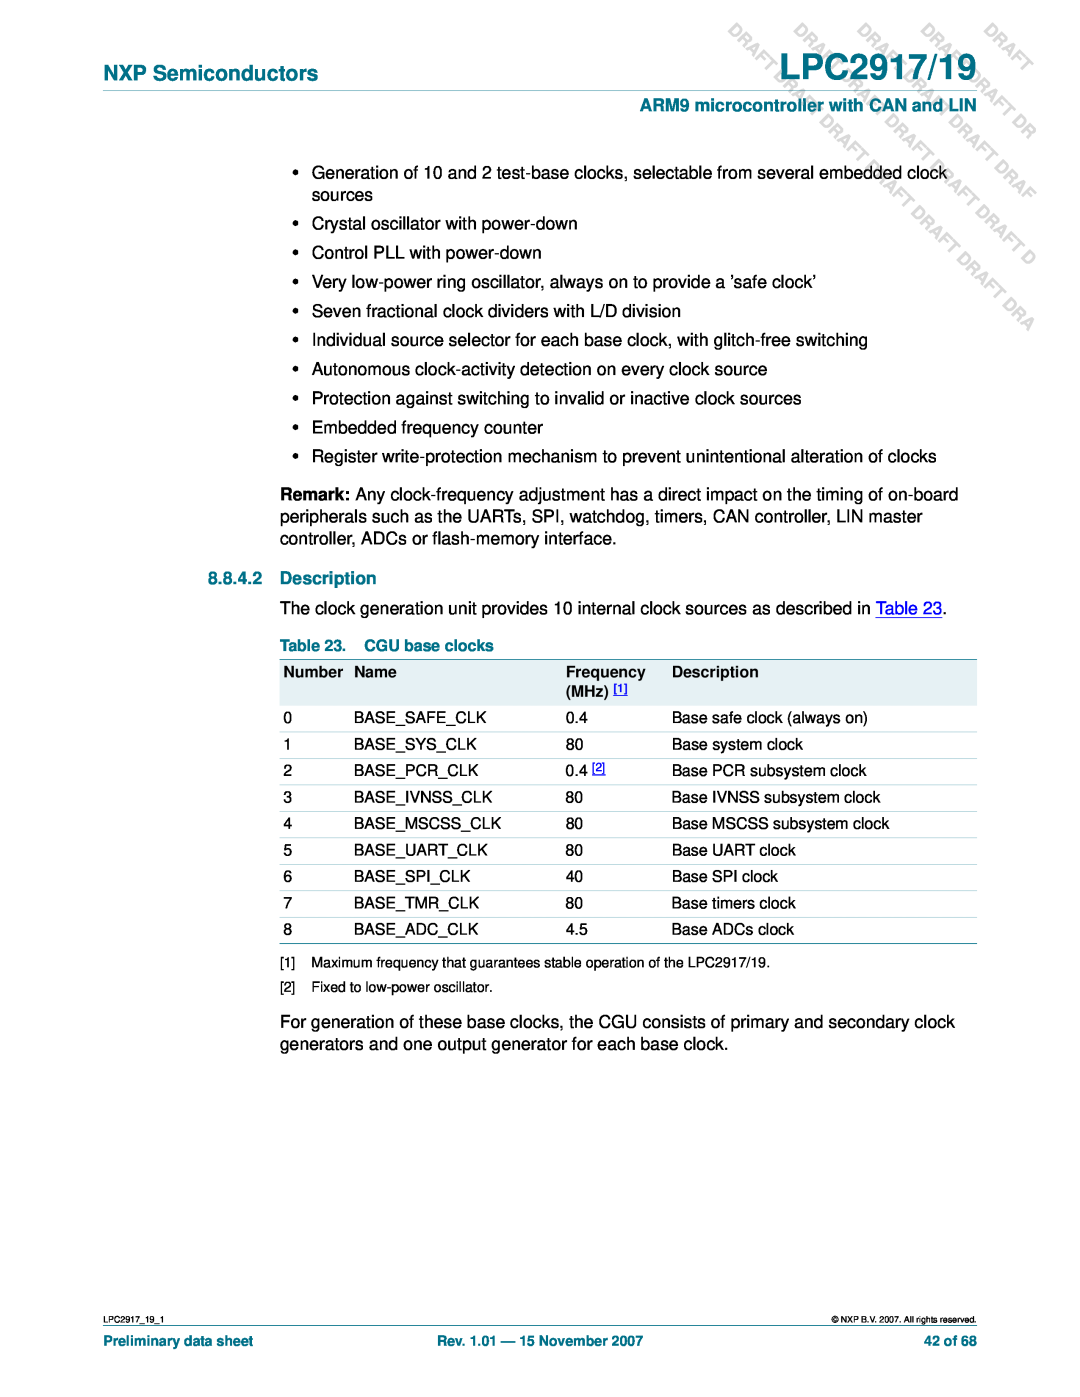 NXP Semiconductors LPC2919 user manual Description, DLPC2917/19, Raft Aft, T Draft, NXP Semiconductors 